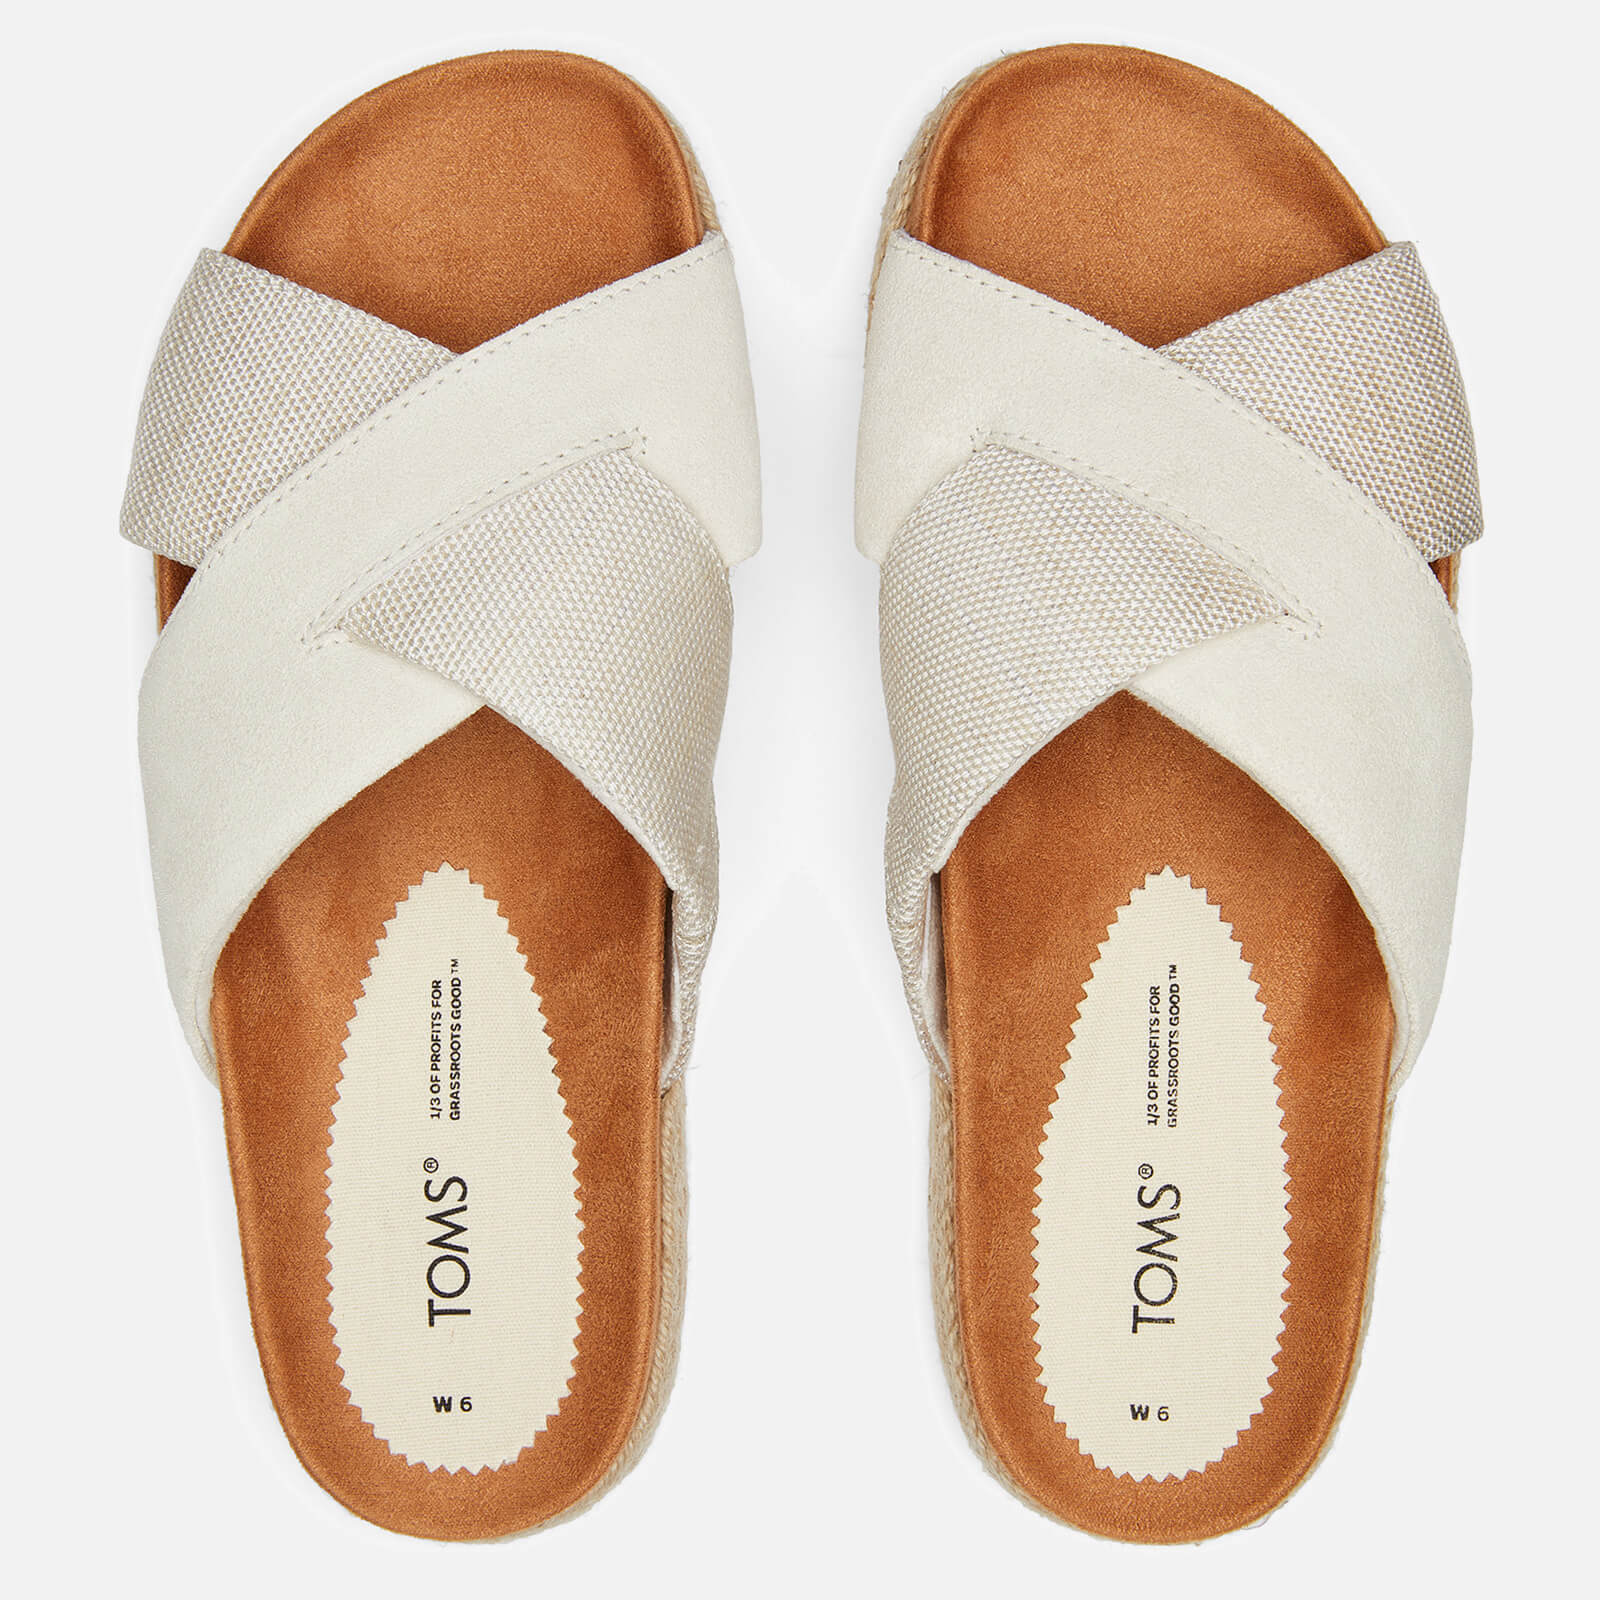 Toms Women's Paloma Cross Front Sandals - Egret/melange - Uk 5 10018188 Mens Footwear, White